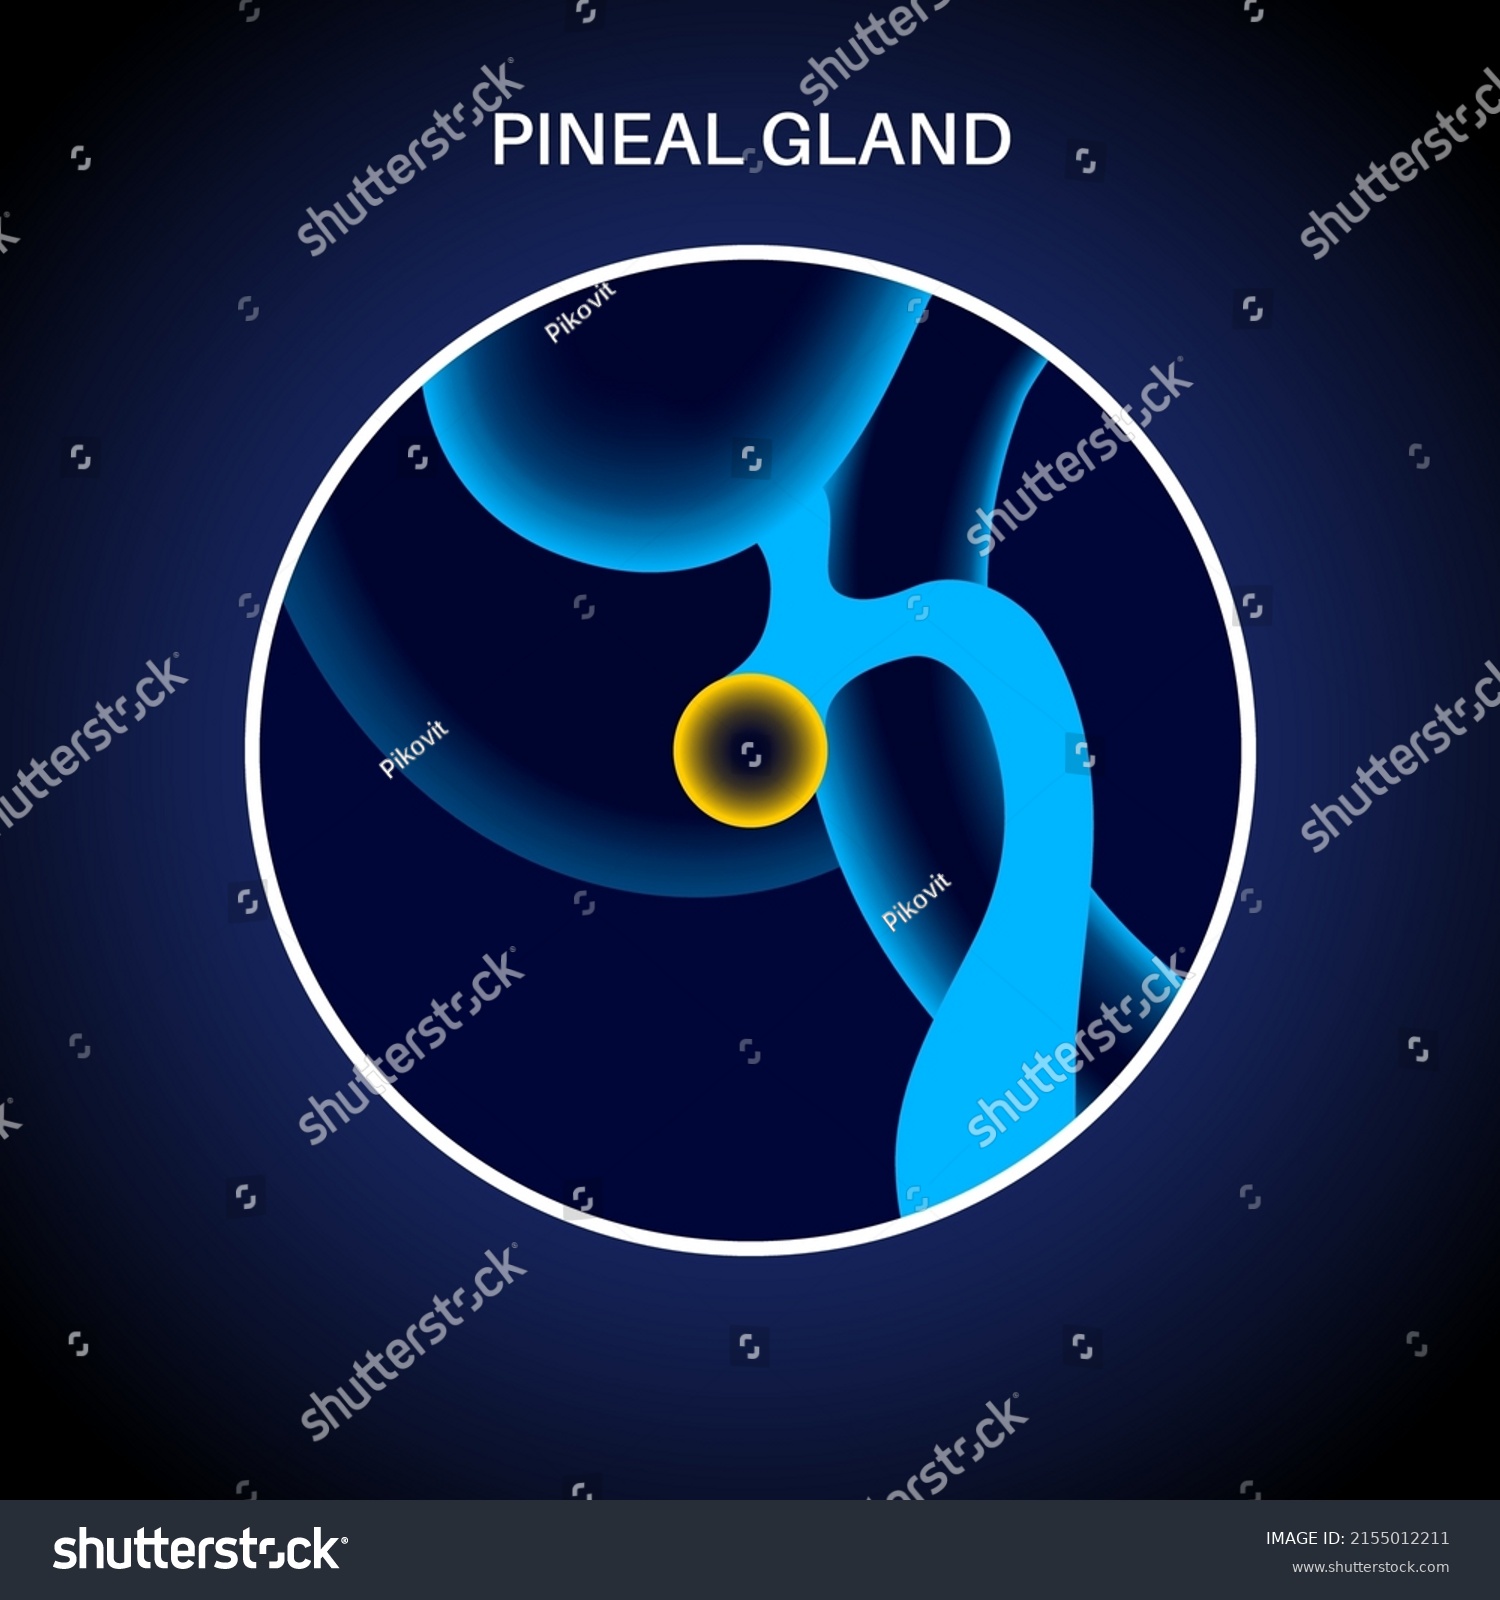 Pineal Gland Epithalamus Anatomy Human Brain Stock Vector Royalty Free 2155012211 Shutterstock 0927